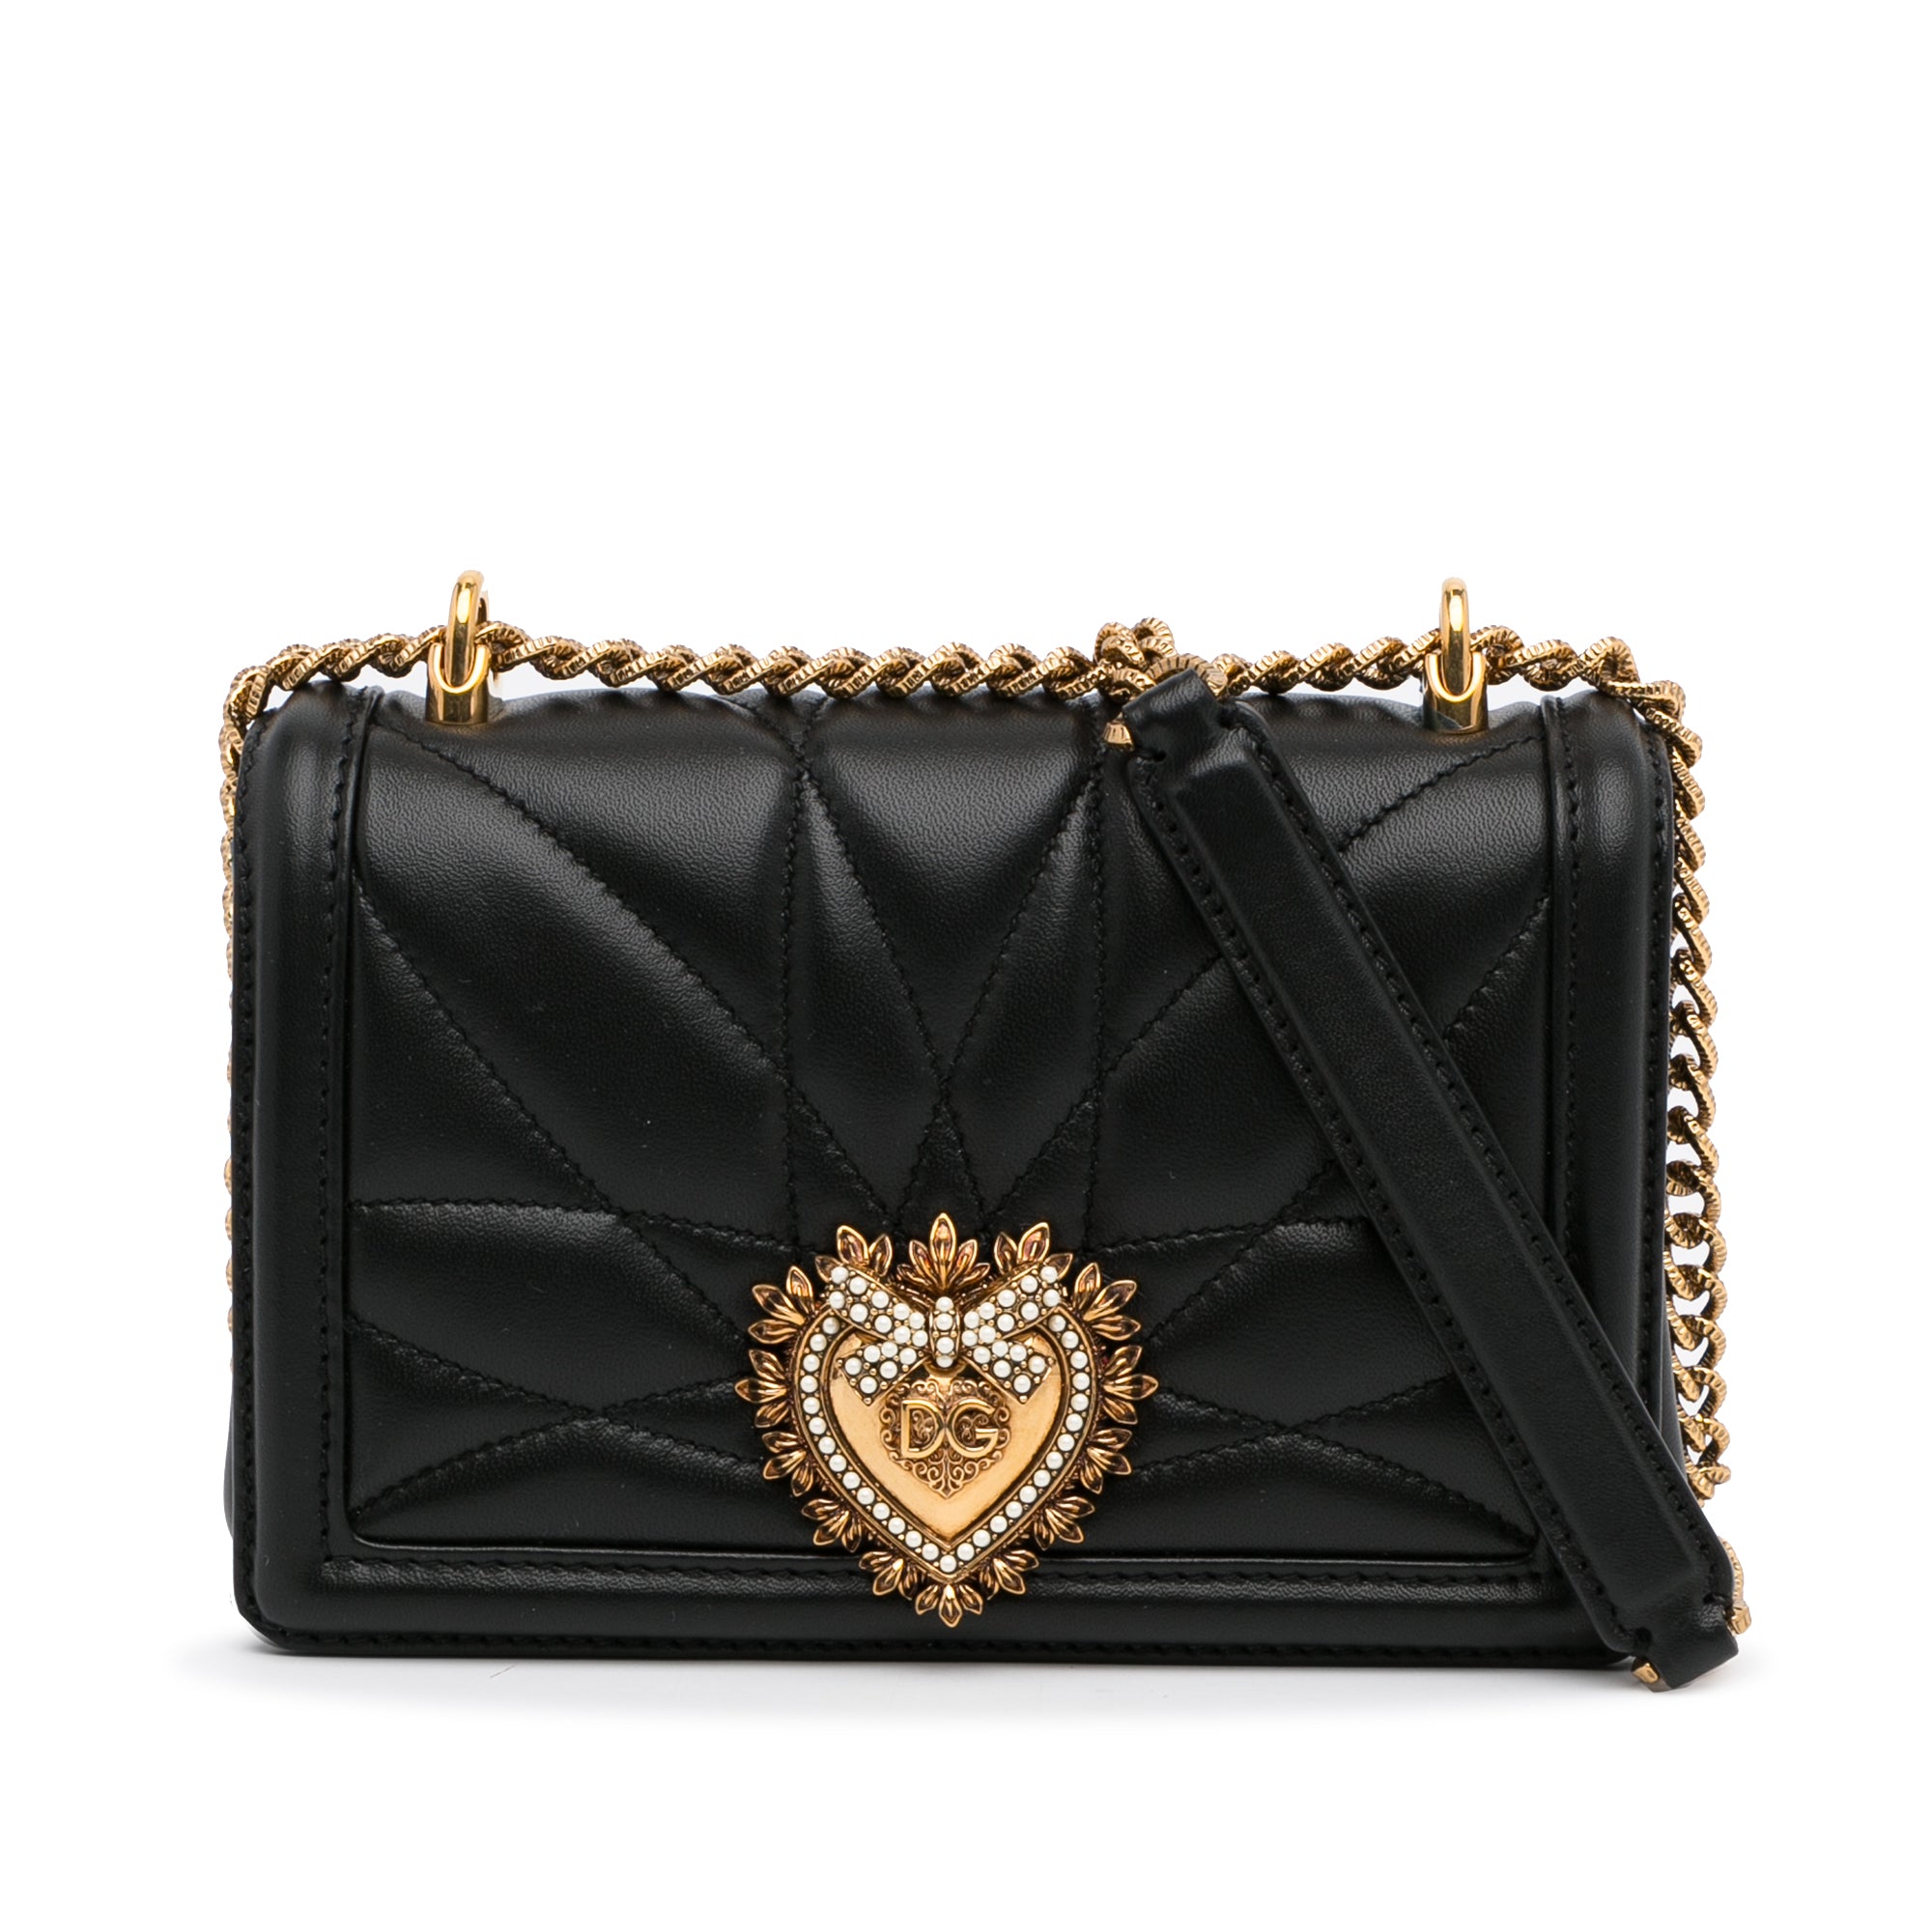 Dolce & Gabbana Gold Small Devotion Bag